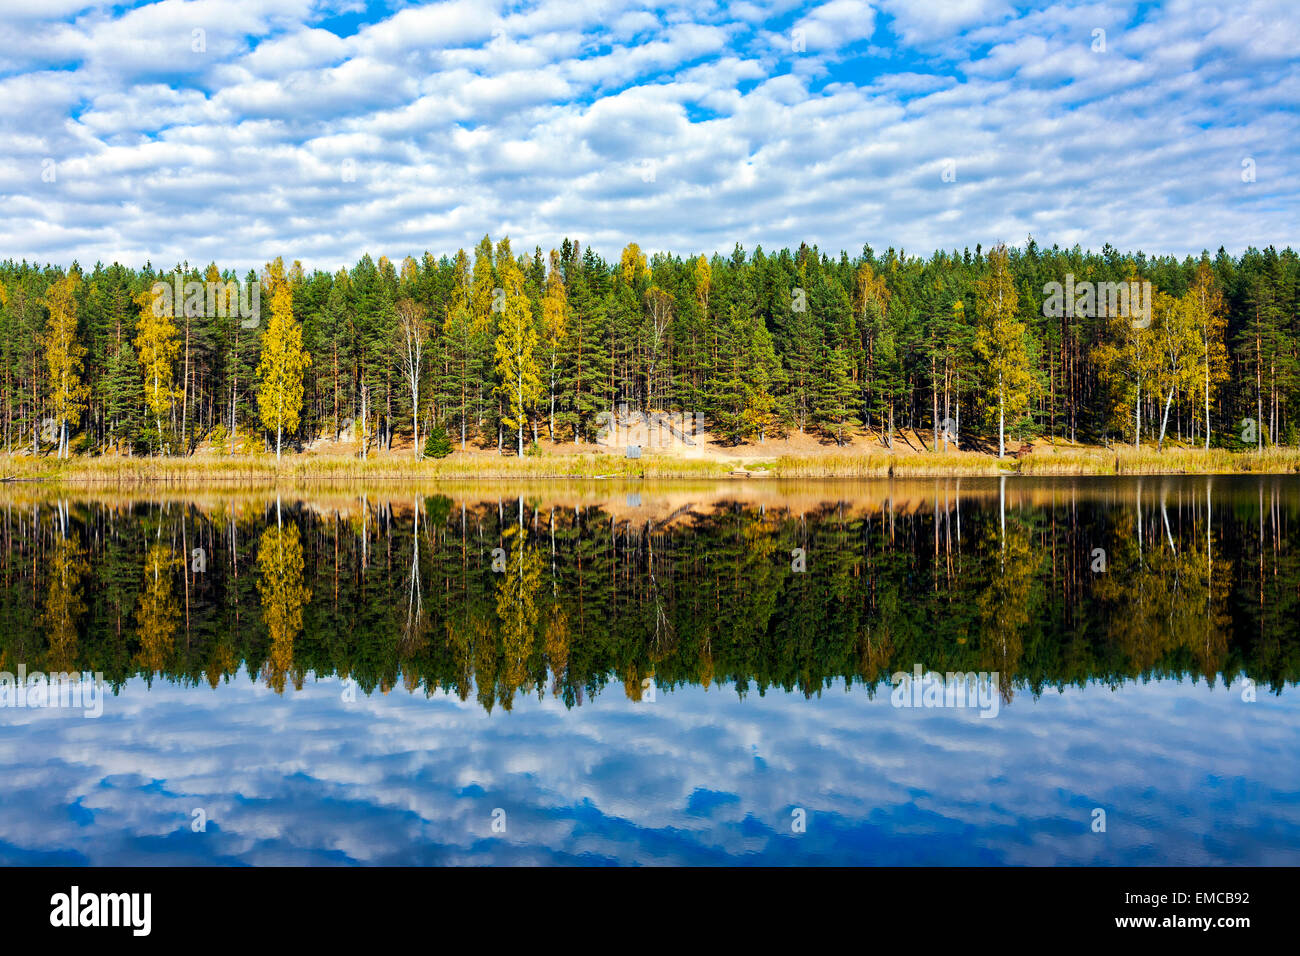 Estonia, Odri lake, trees reflecting on calm water Stock Photo